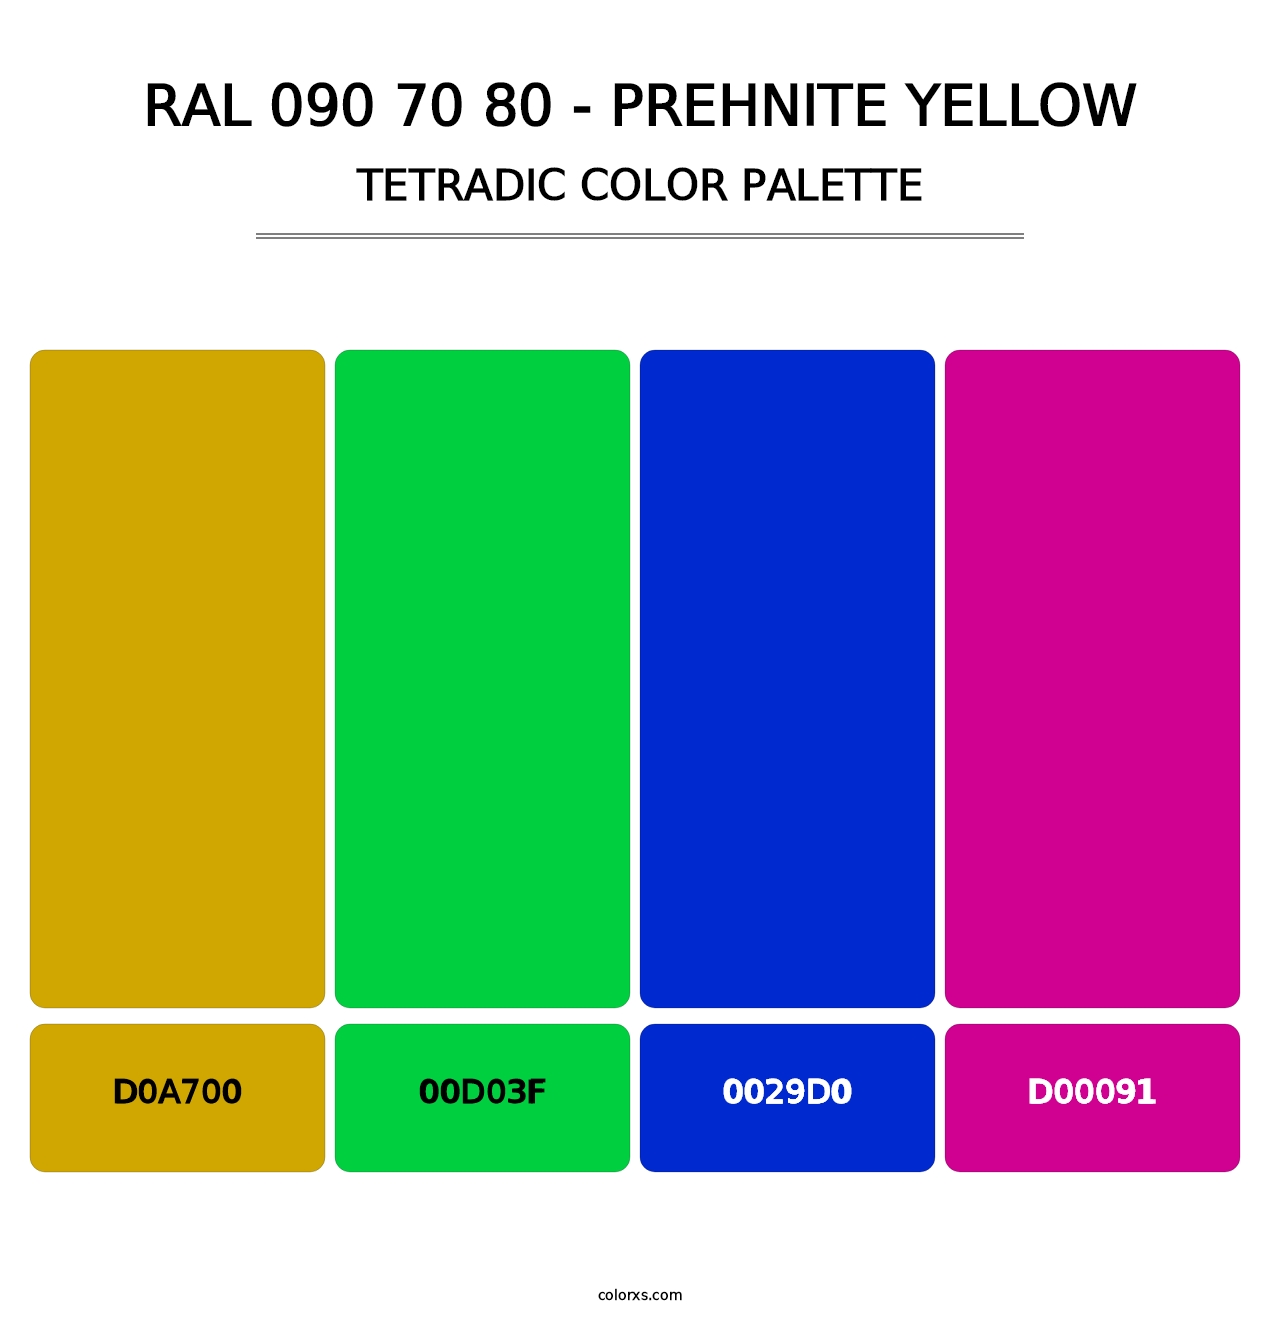 RAL 090 70 80 - Prehnite Yellow - Tetradic Color Palette